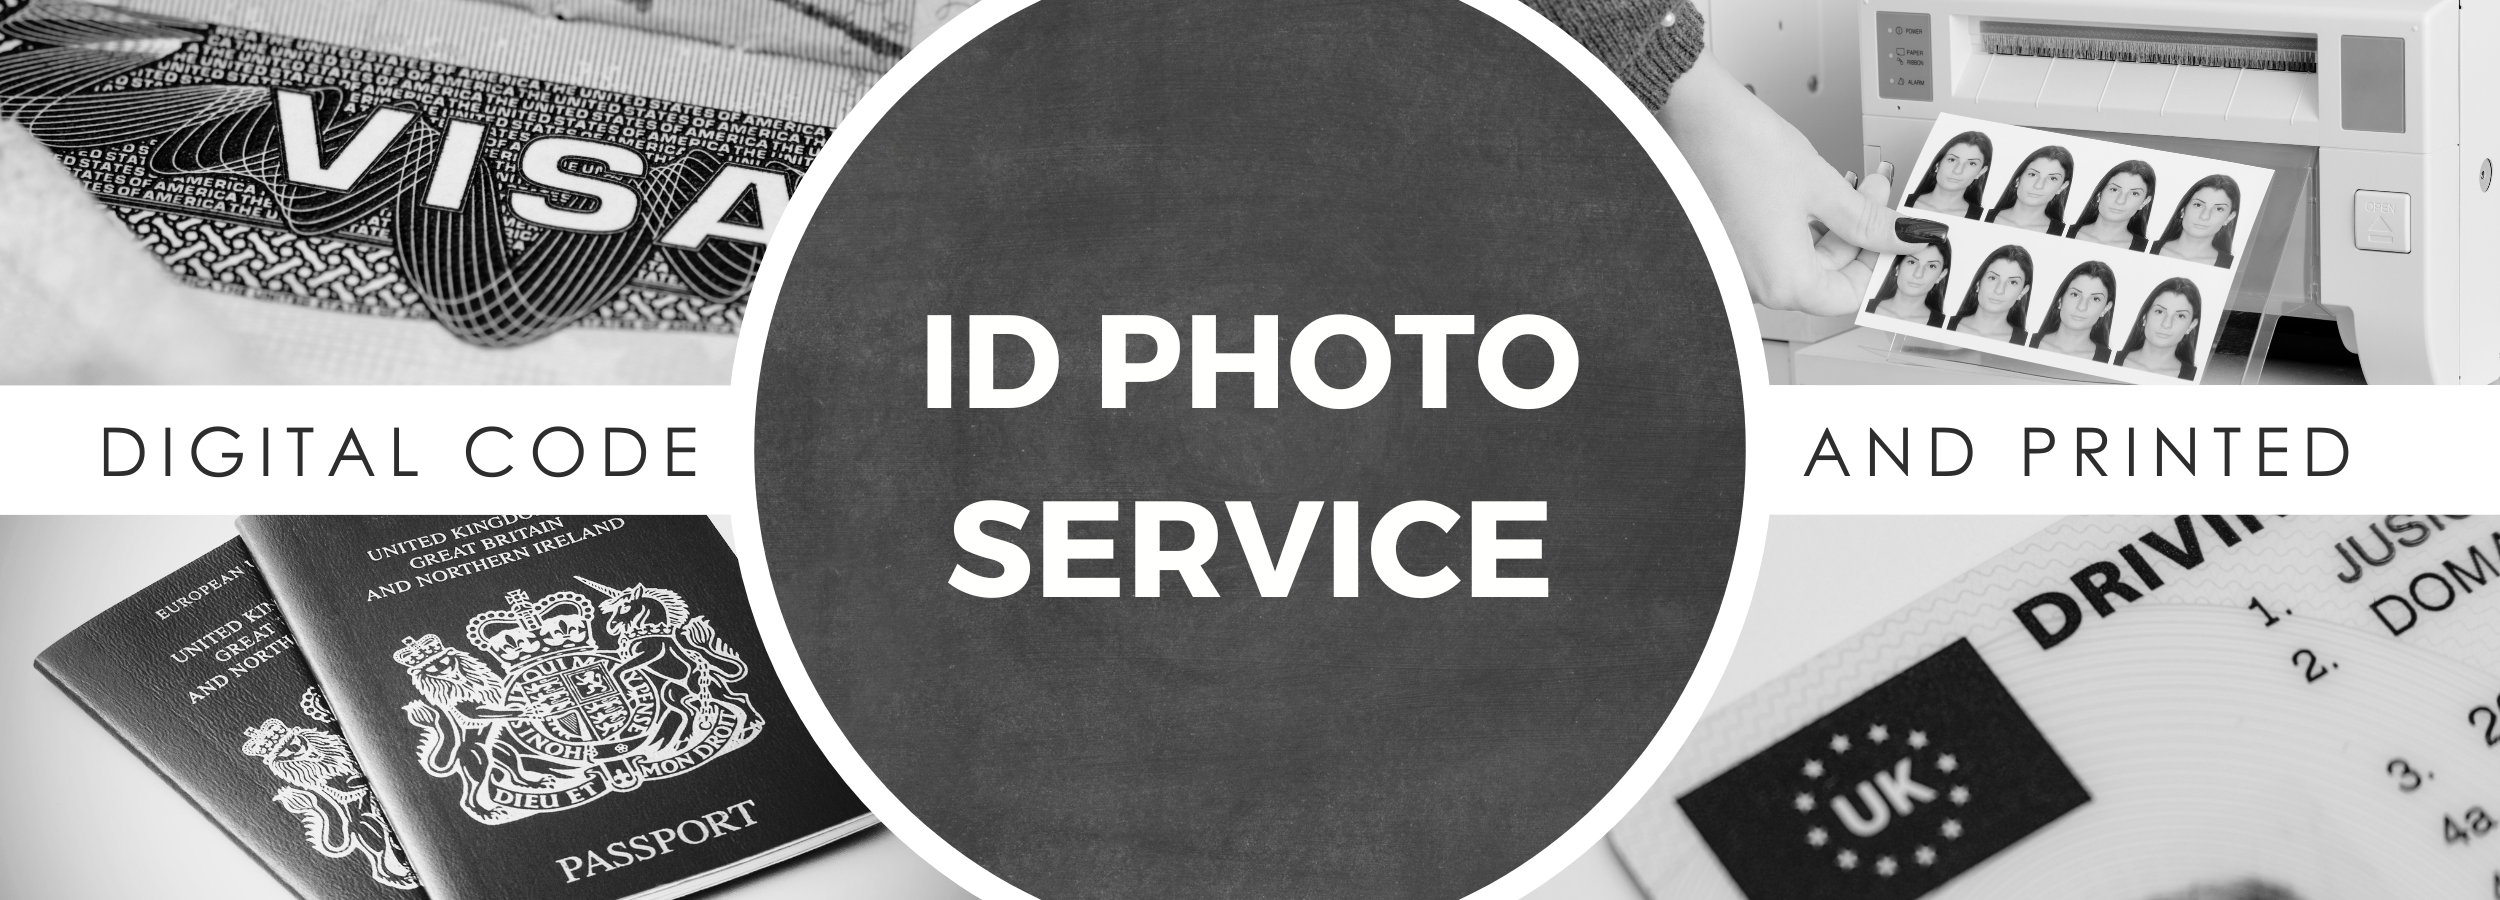 UK Passport / ID photographs - printed and digital code.